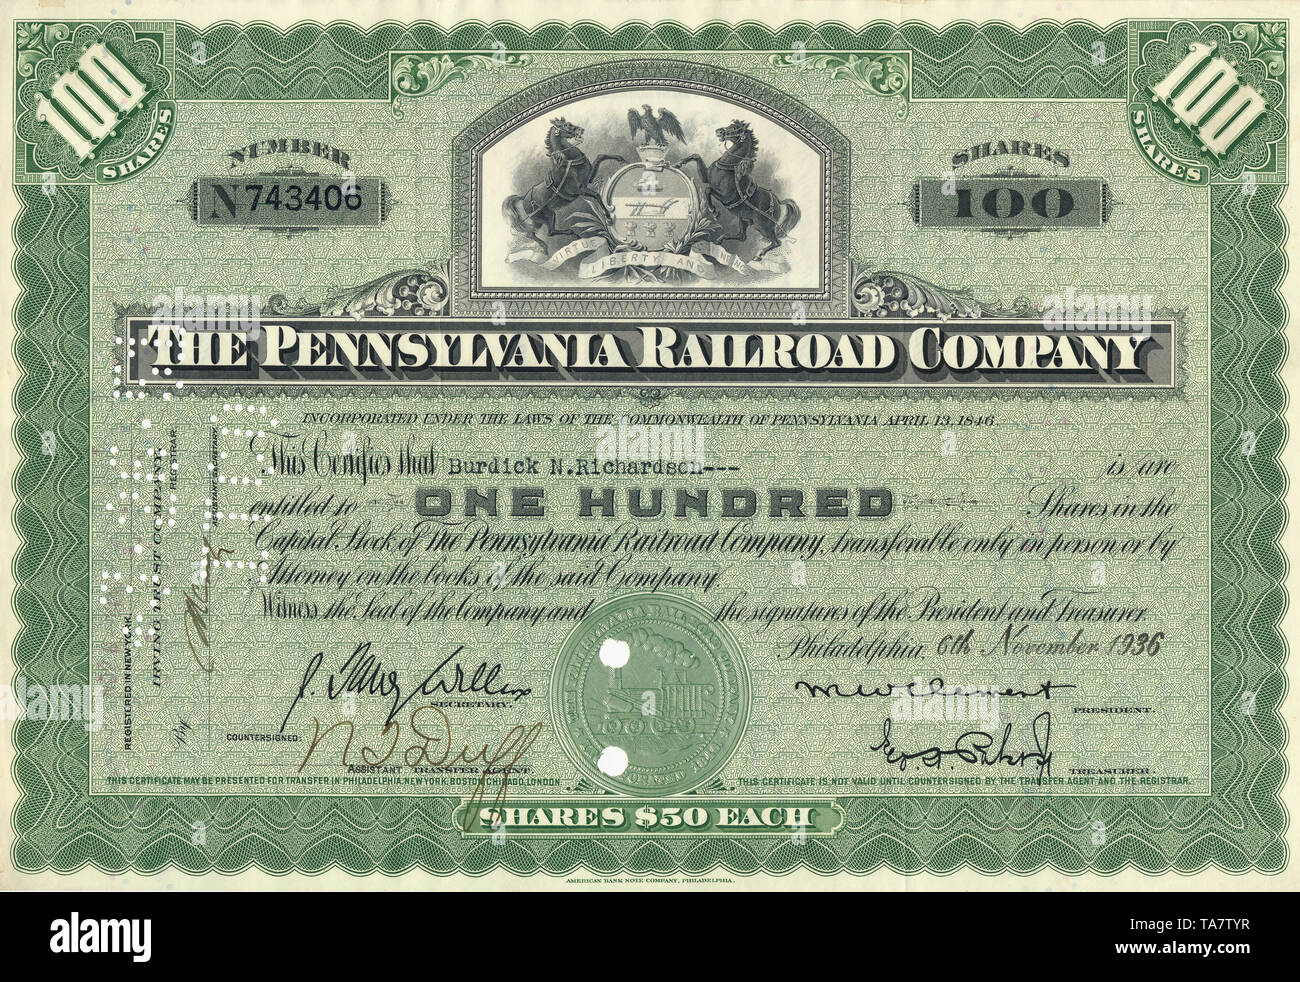 Historic share certificate, Historische Aktie, The Pennsylvana Railroad Company PRR, US-amerikanische Eisenbahngesellschaft, Philadelphia, 1936, USA Stock Photo